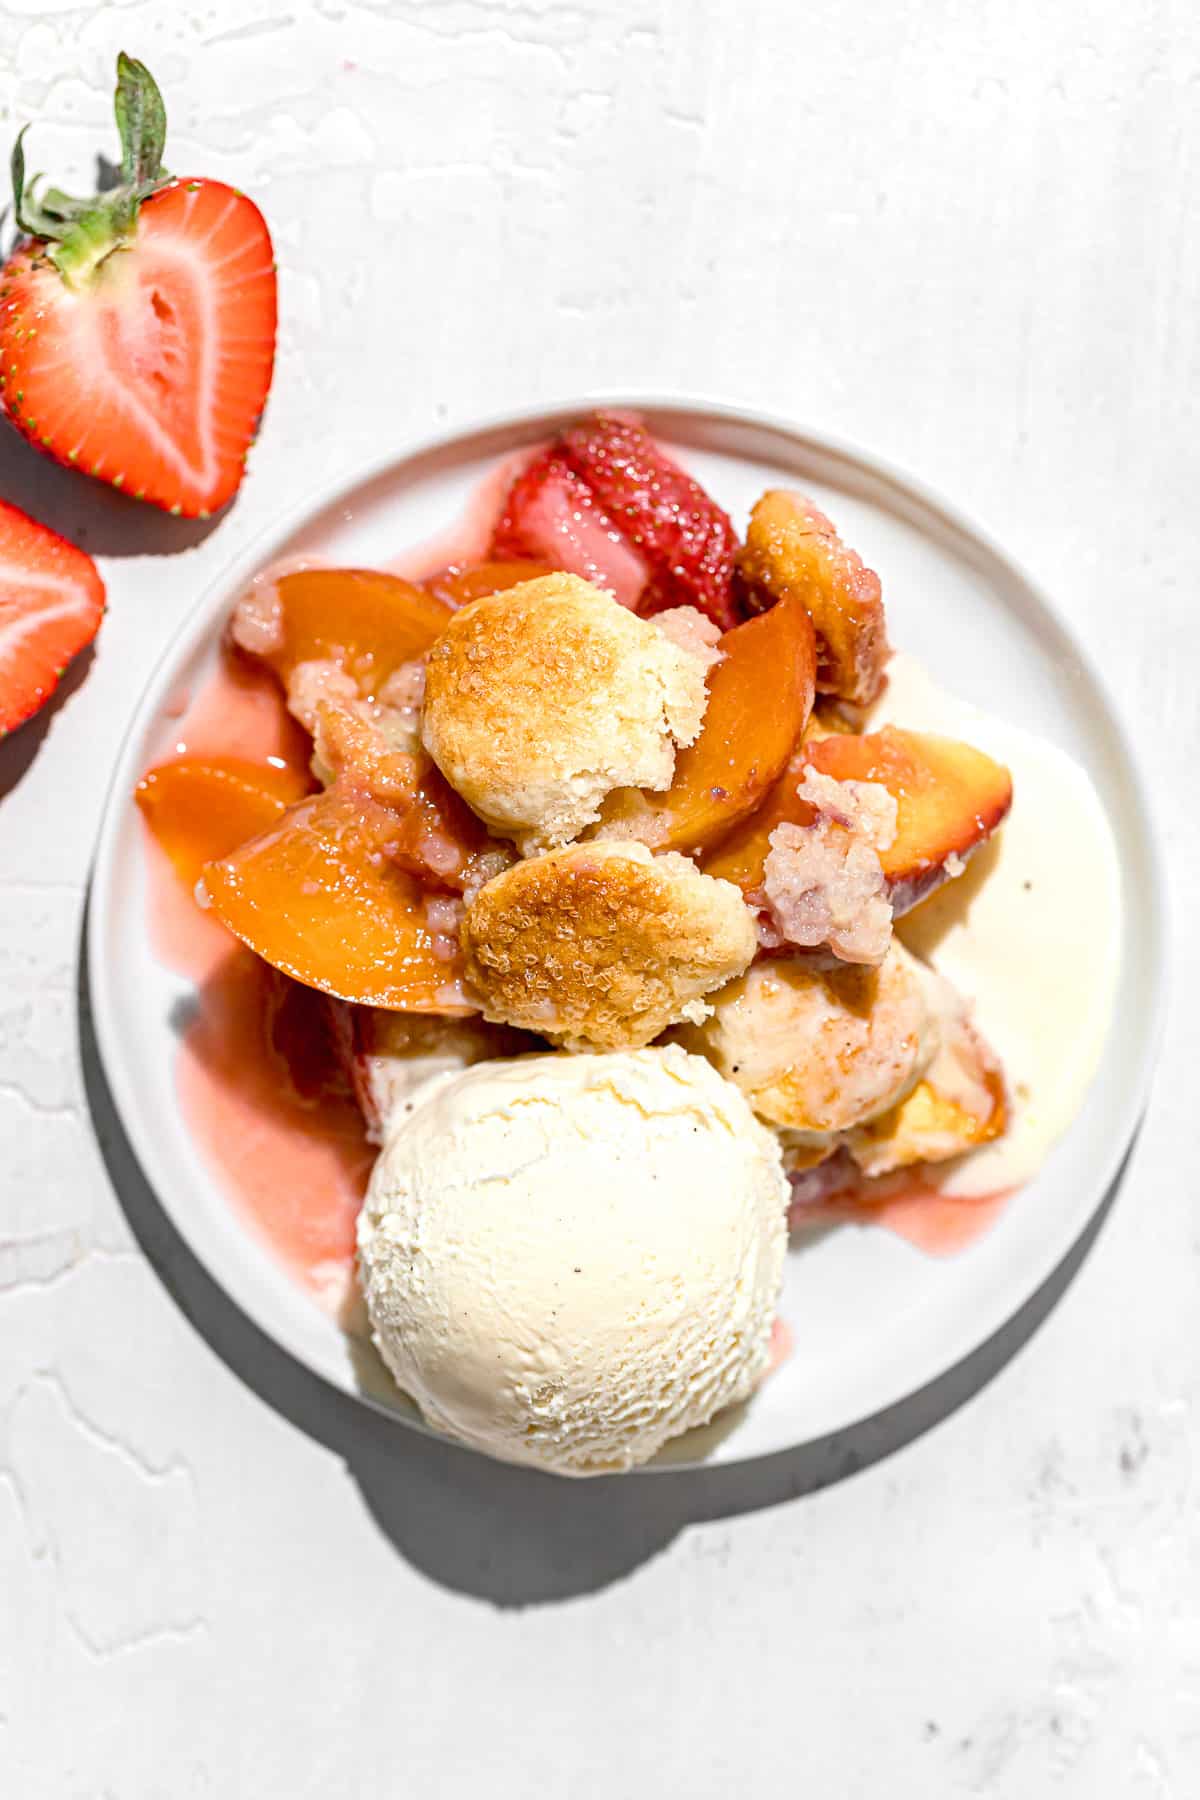 strawberry peach cobbler spooned onto plate with scoop of vanilla ice cream.